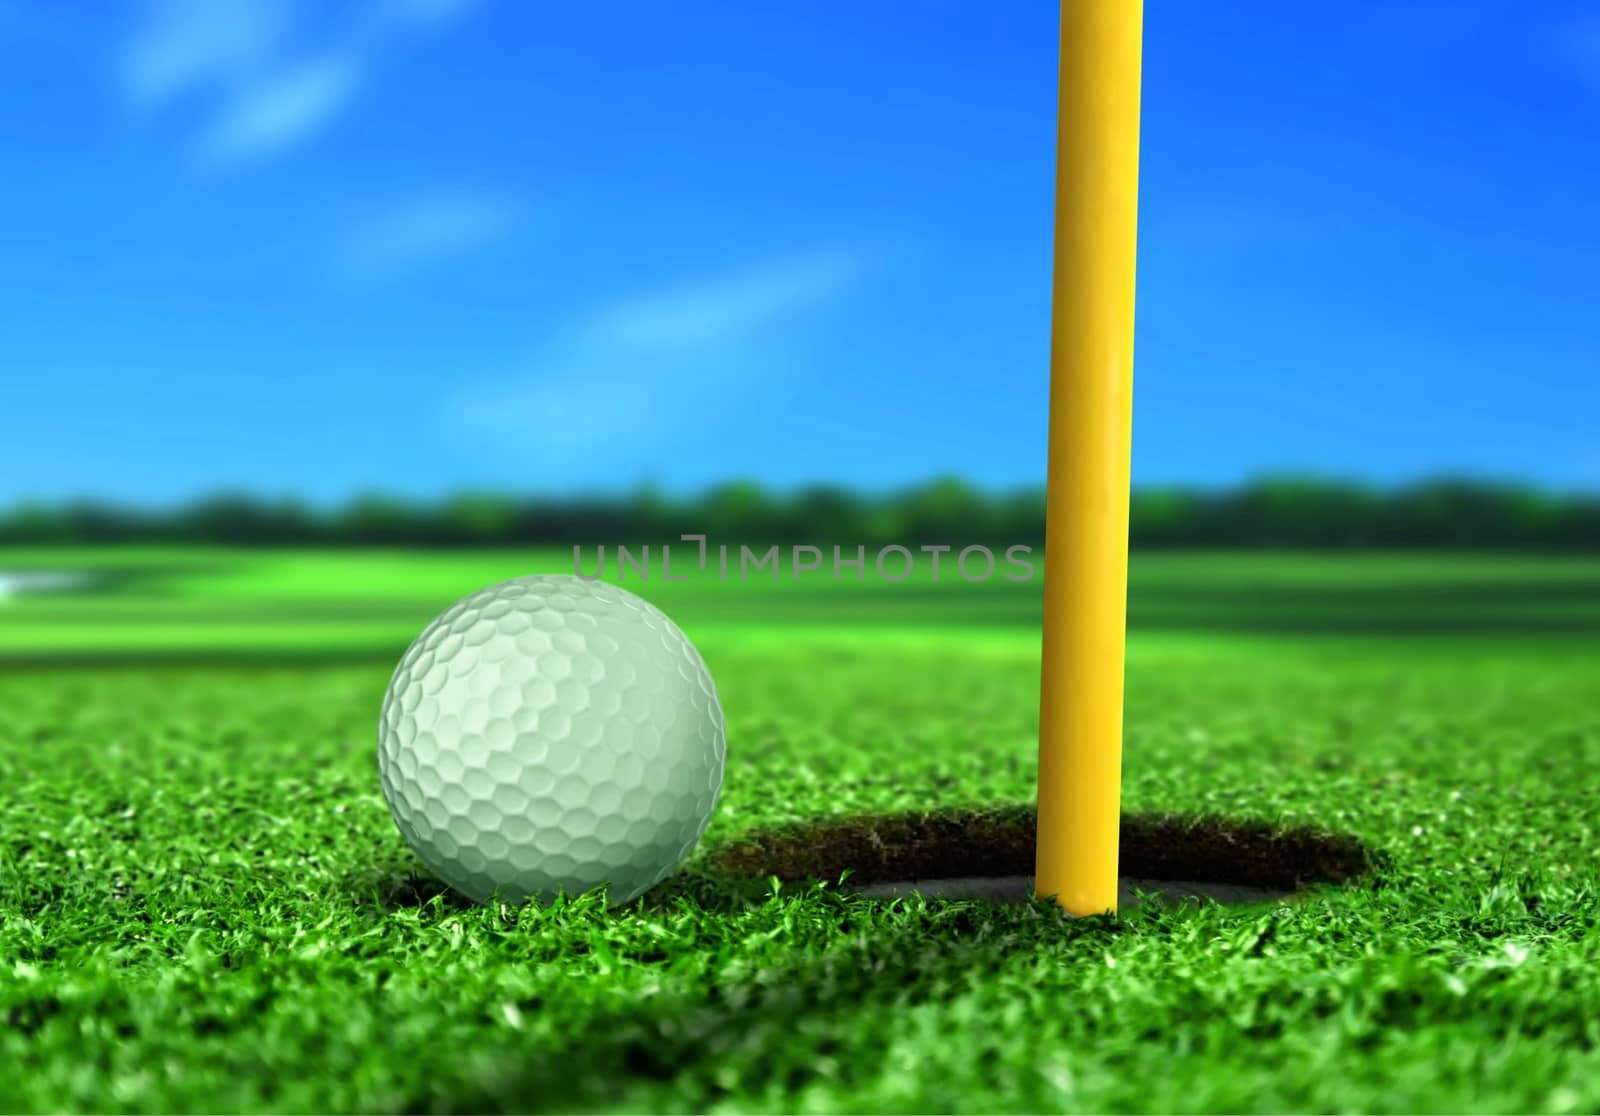 Golf Ball near Hole